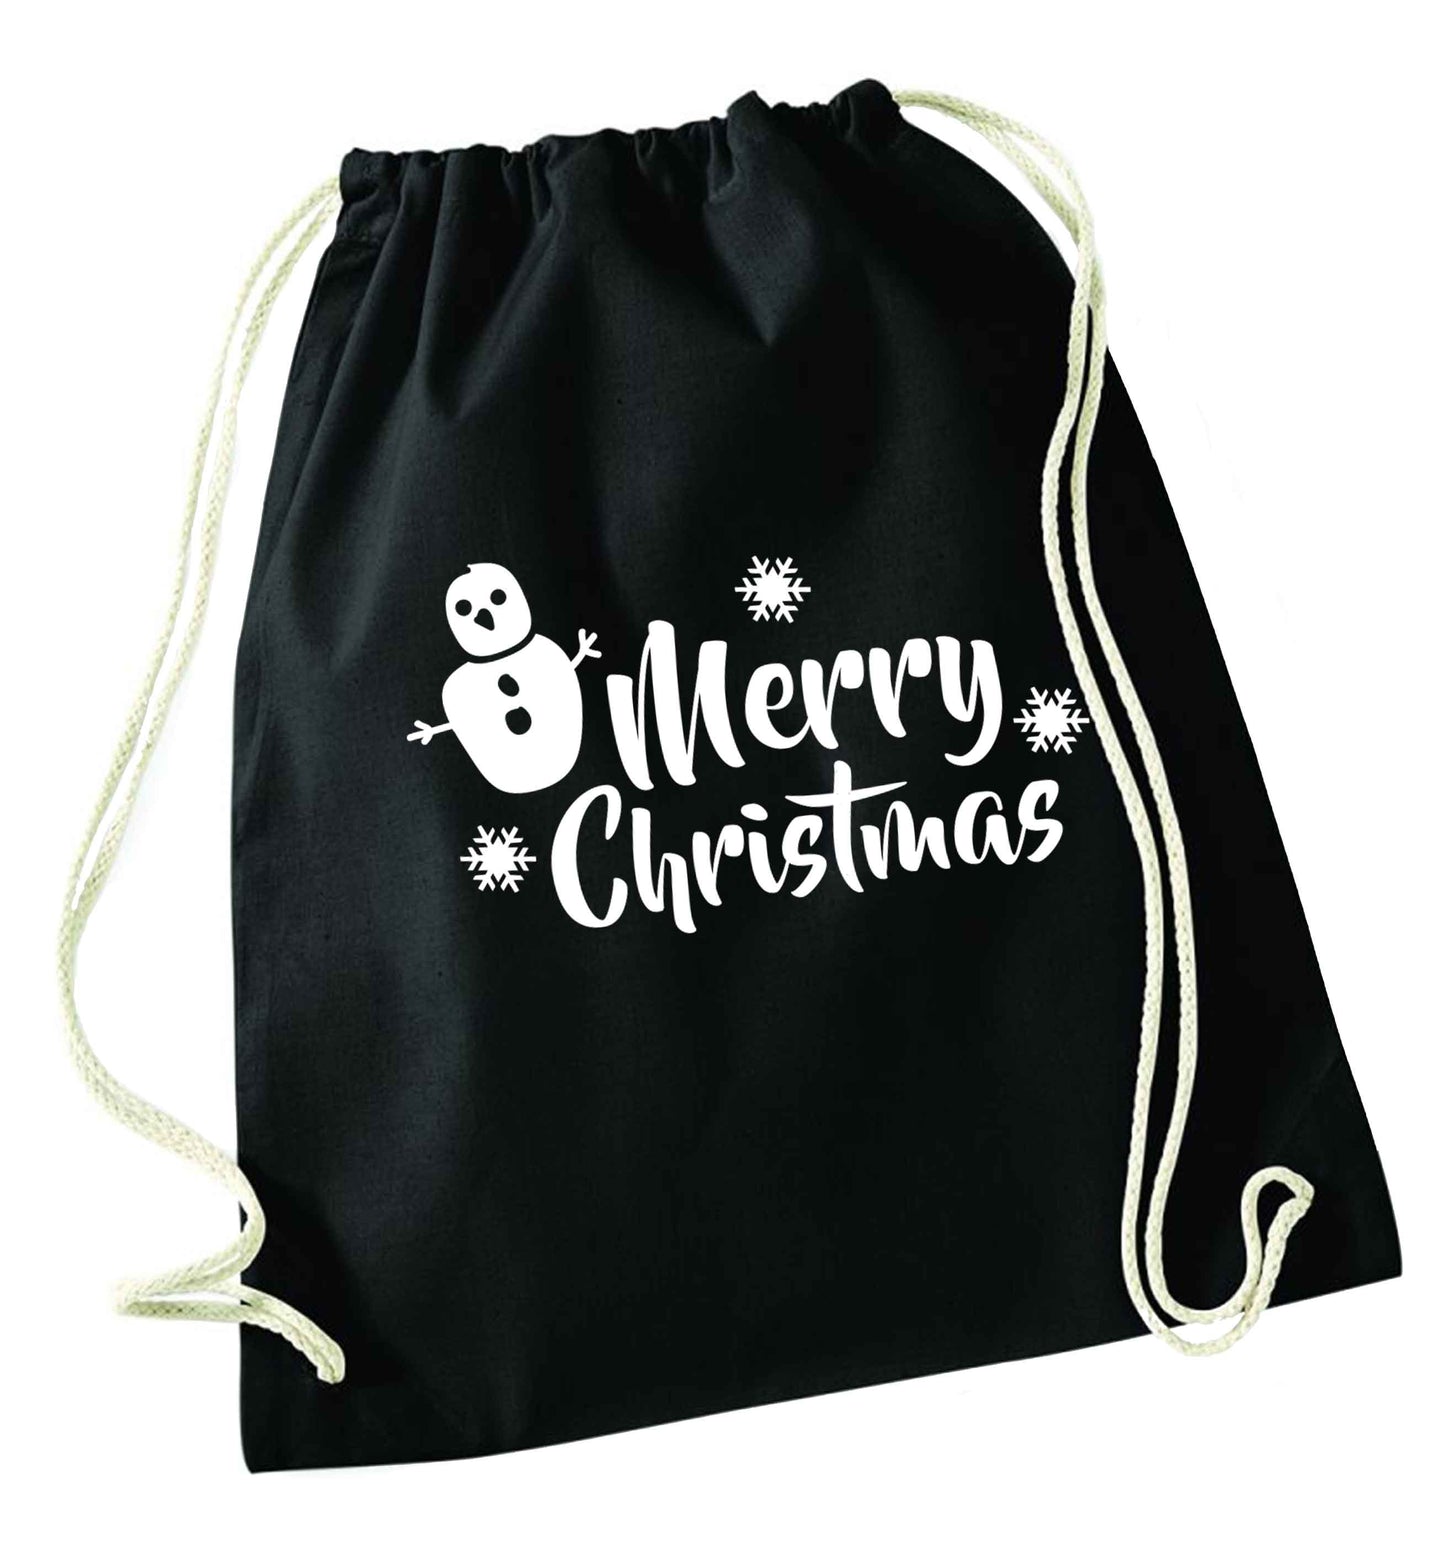 Merry Christmas - snowman black drawstring bag